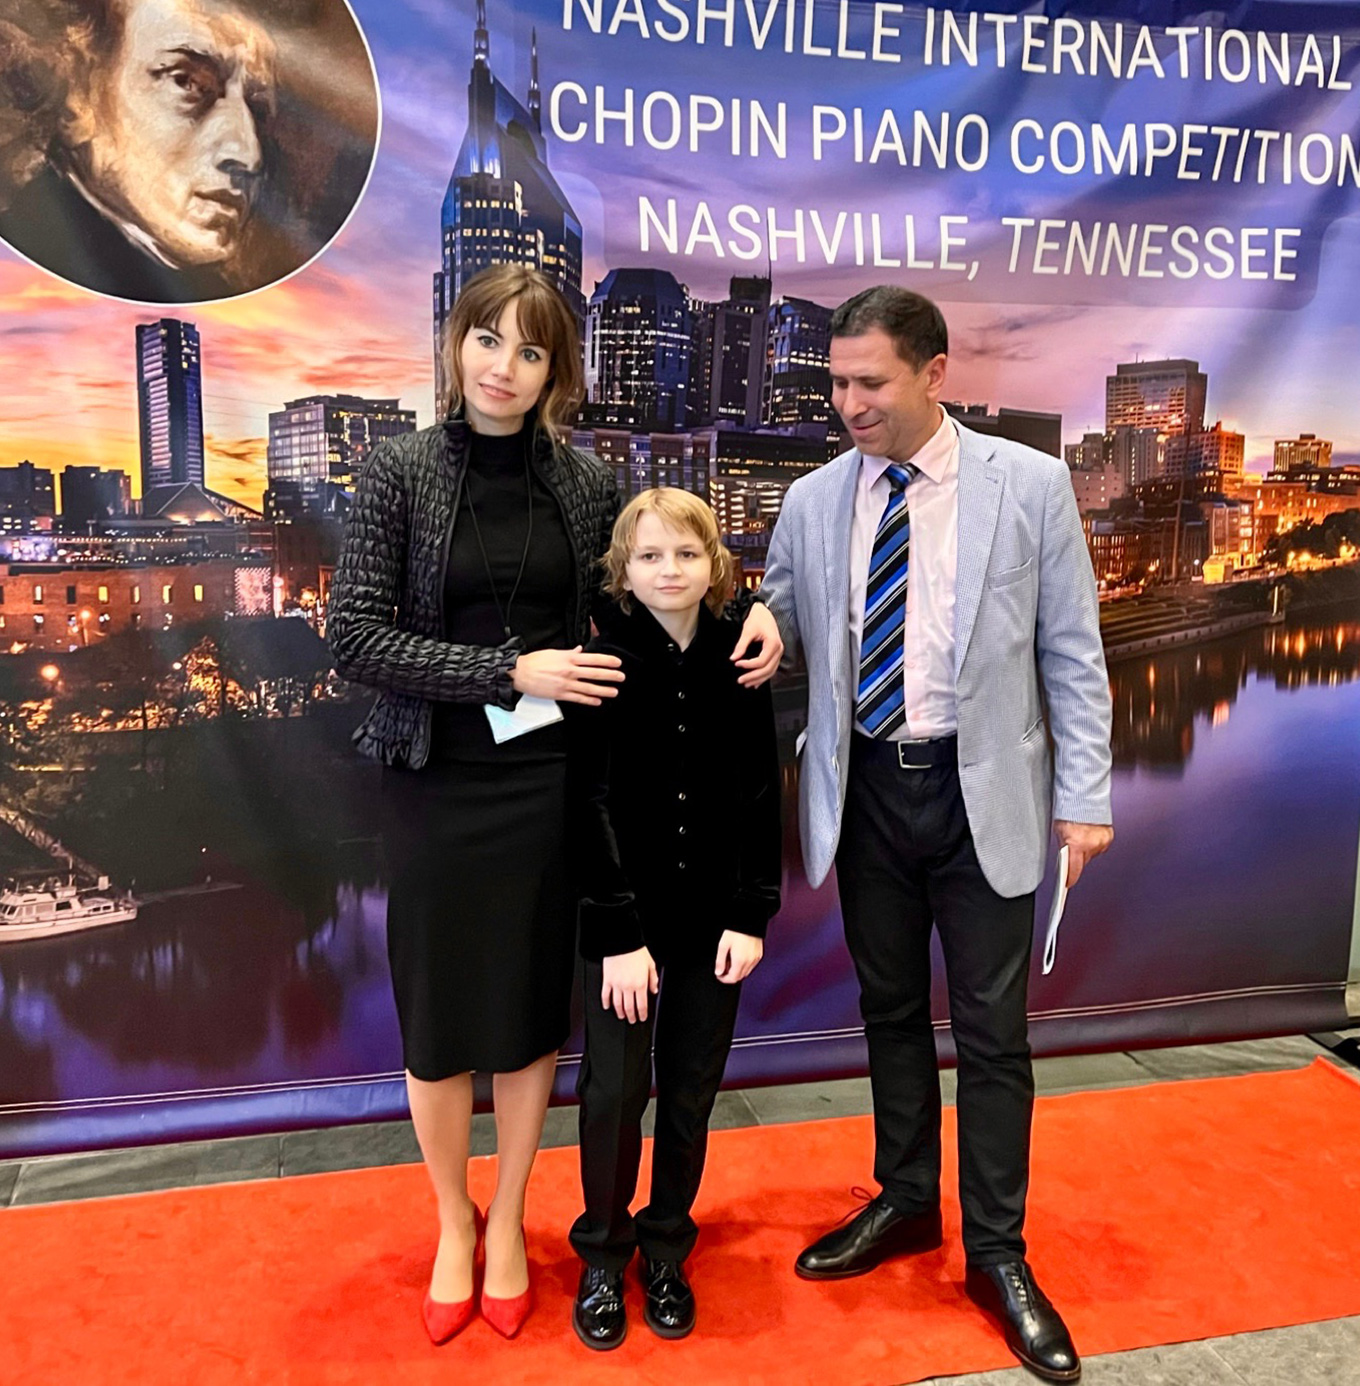 Nashville international chopin piano competition 3